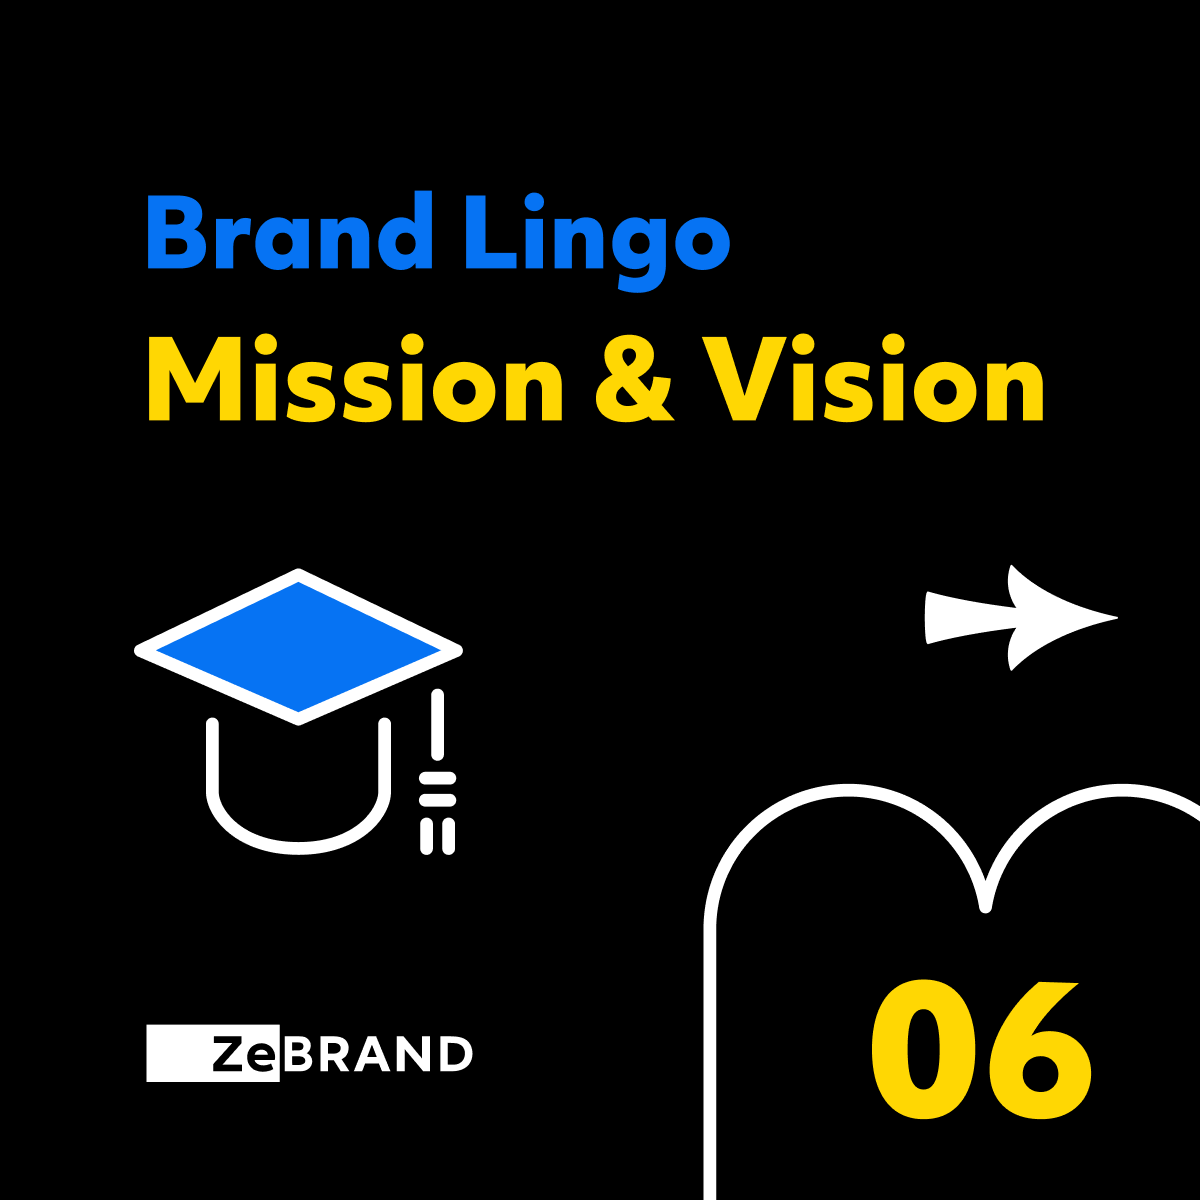 Brand Lingo Mission & Vision